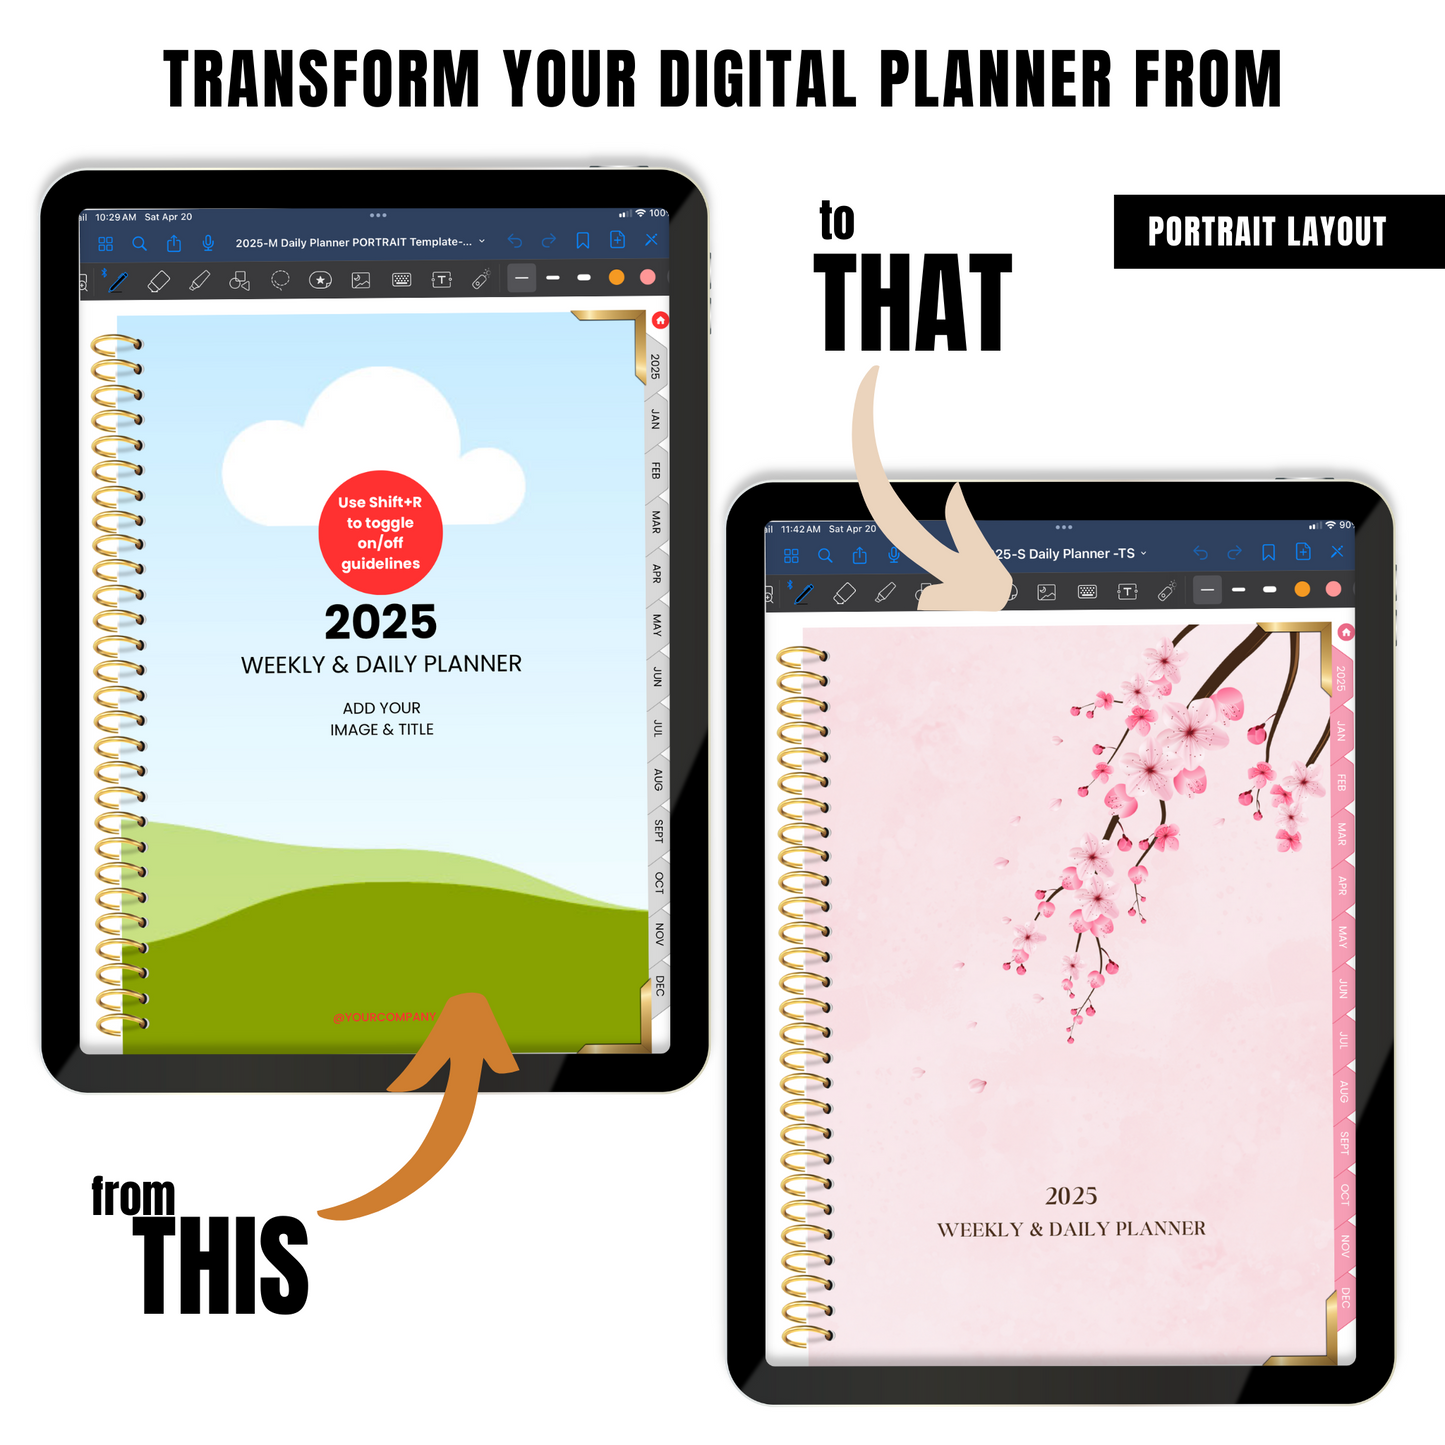 2025 Digital Planner Template - PLR